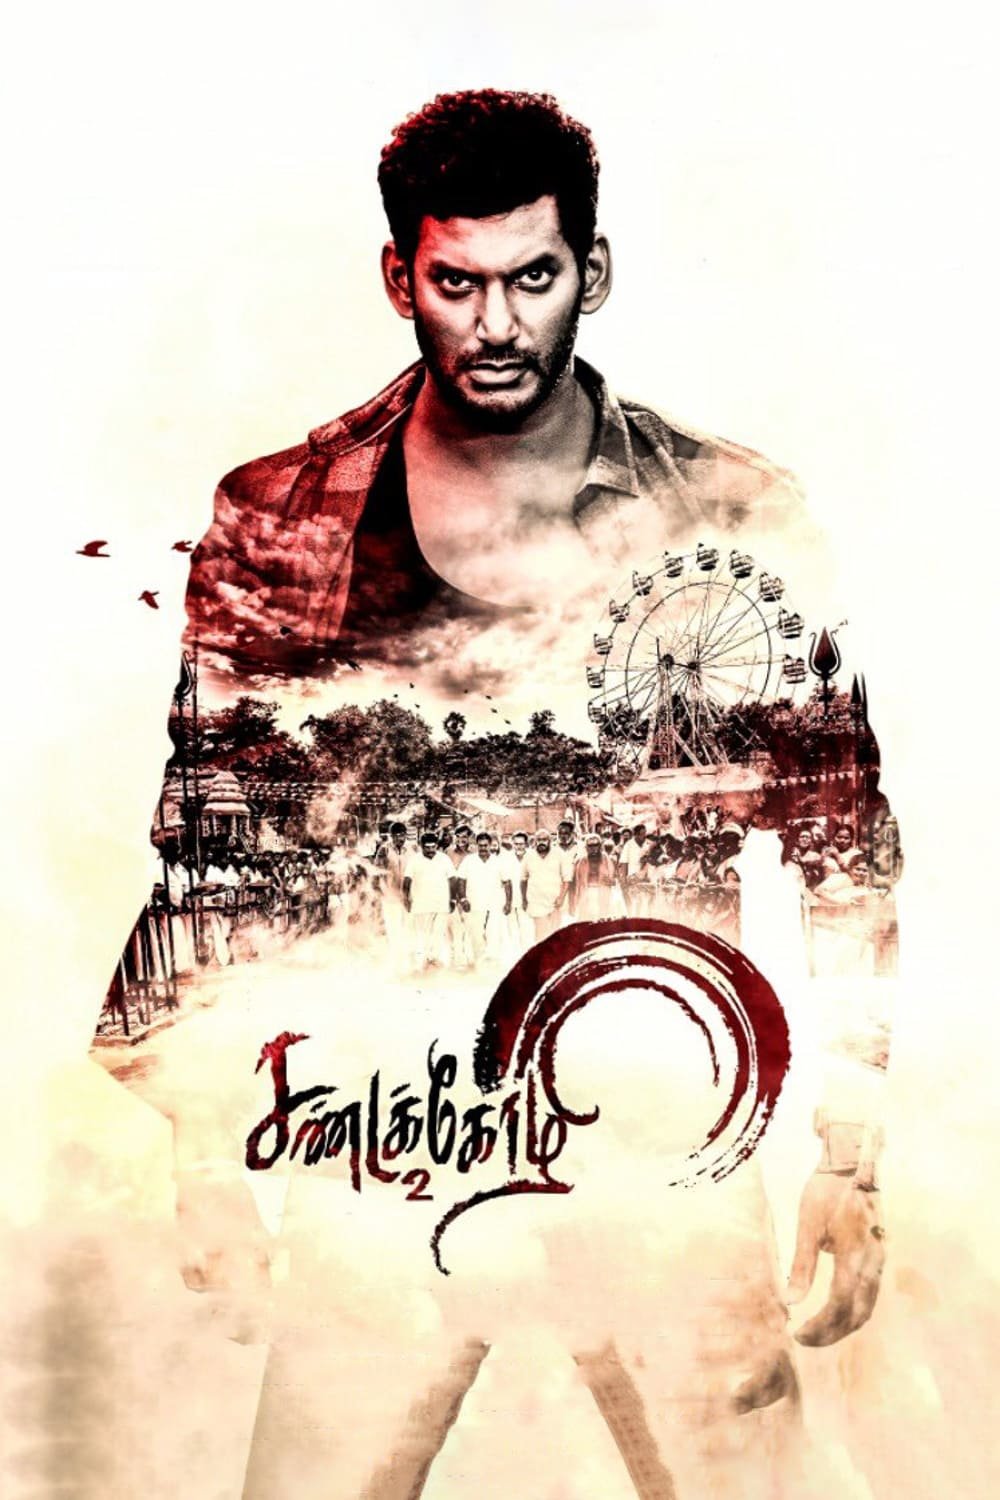 Tamil poster of the movie Sandakozhi 2